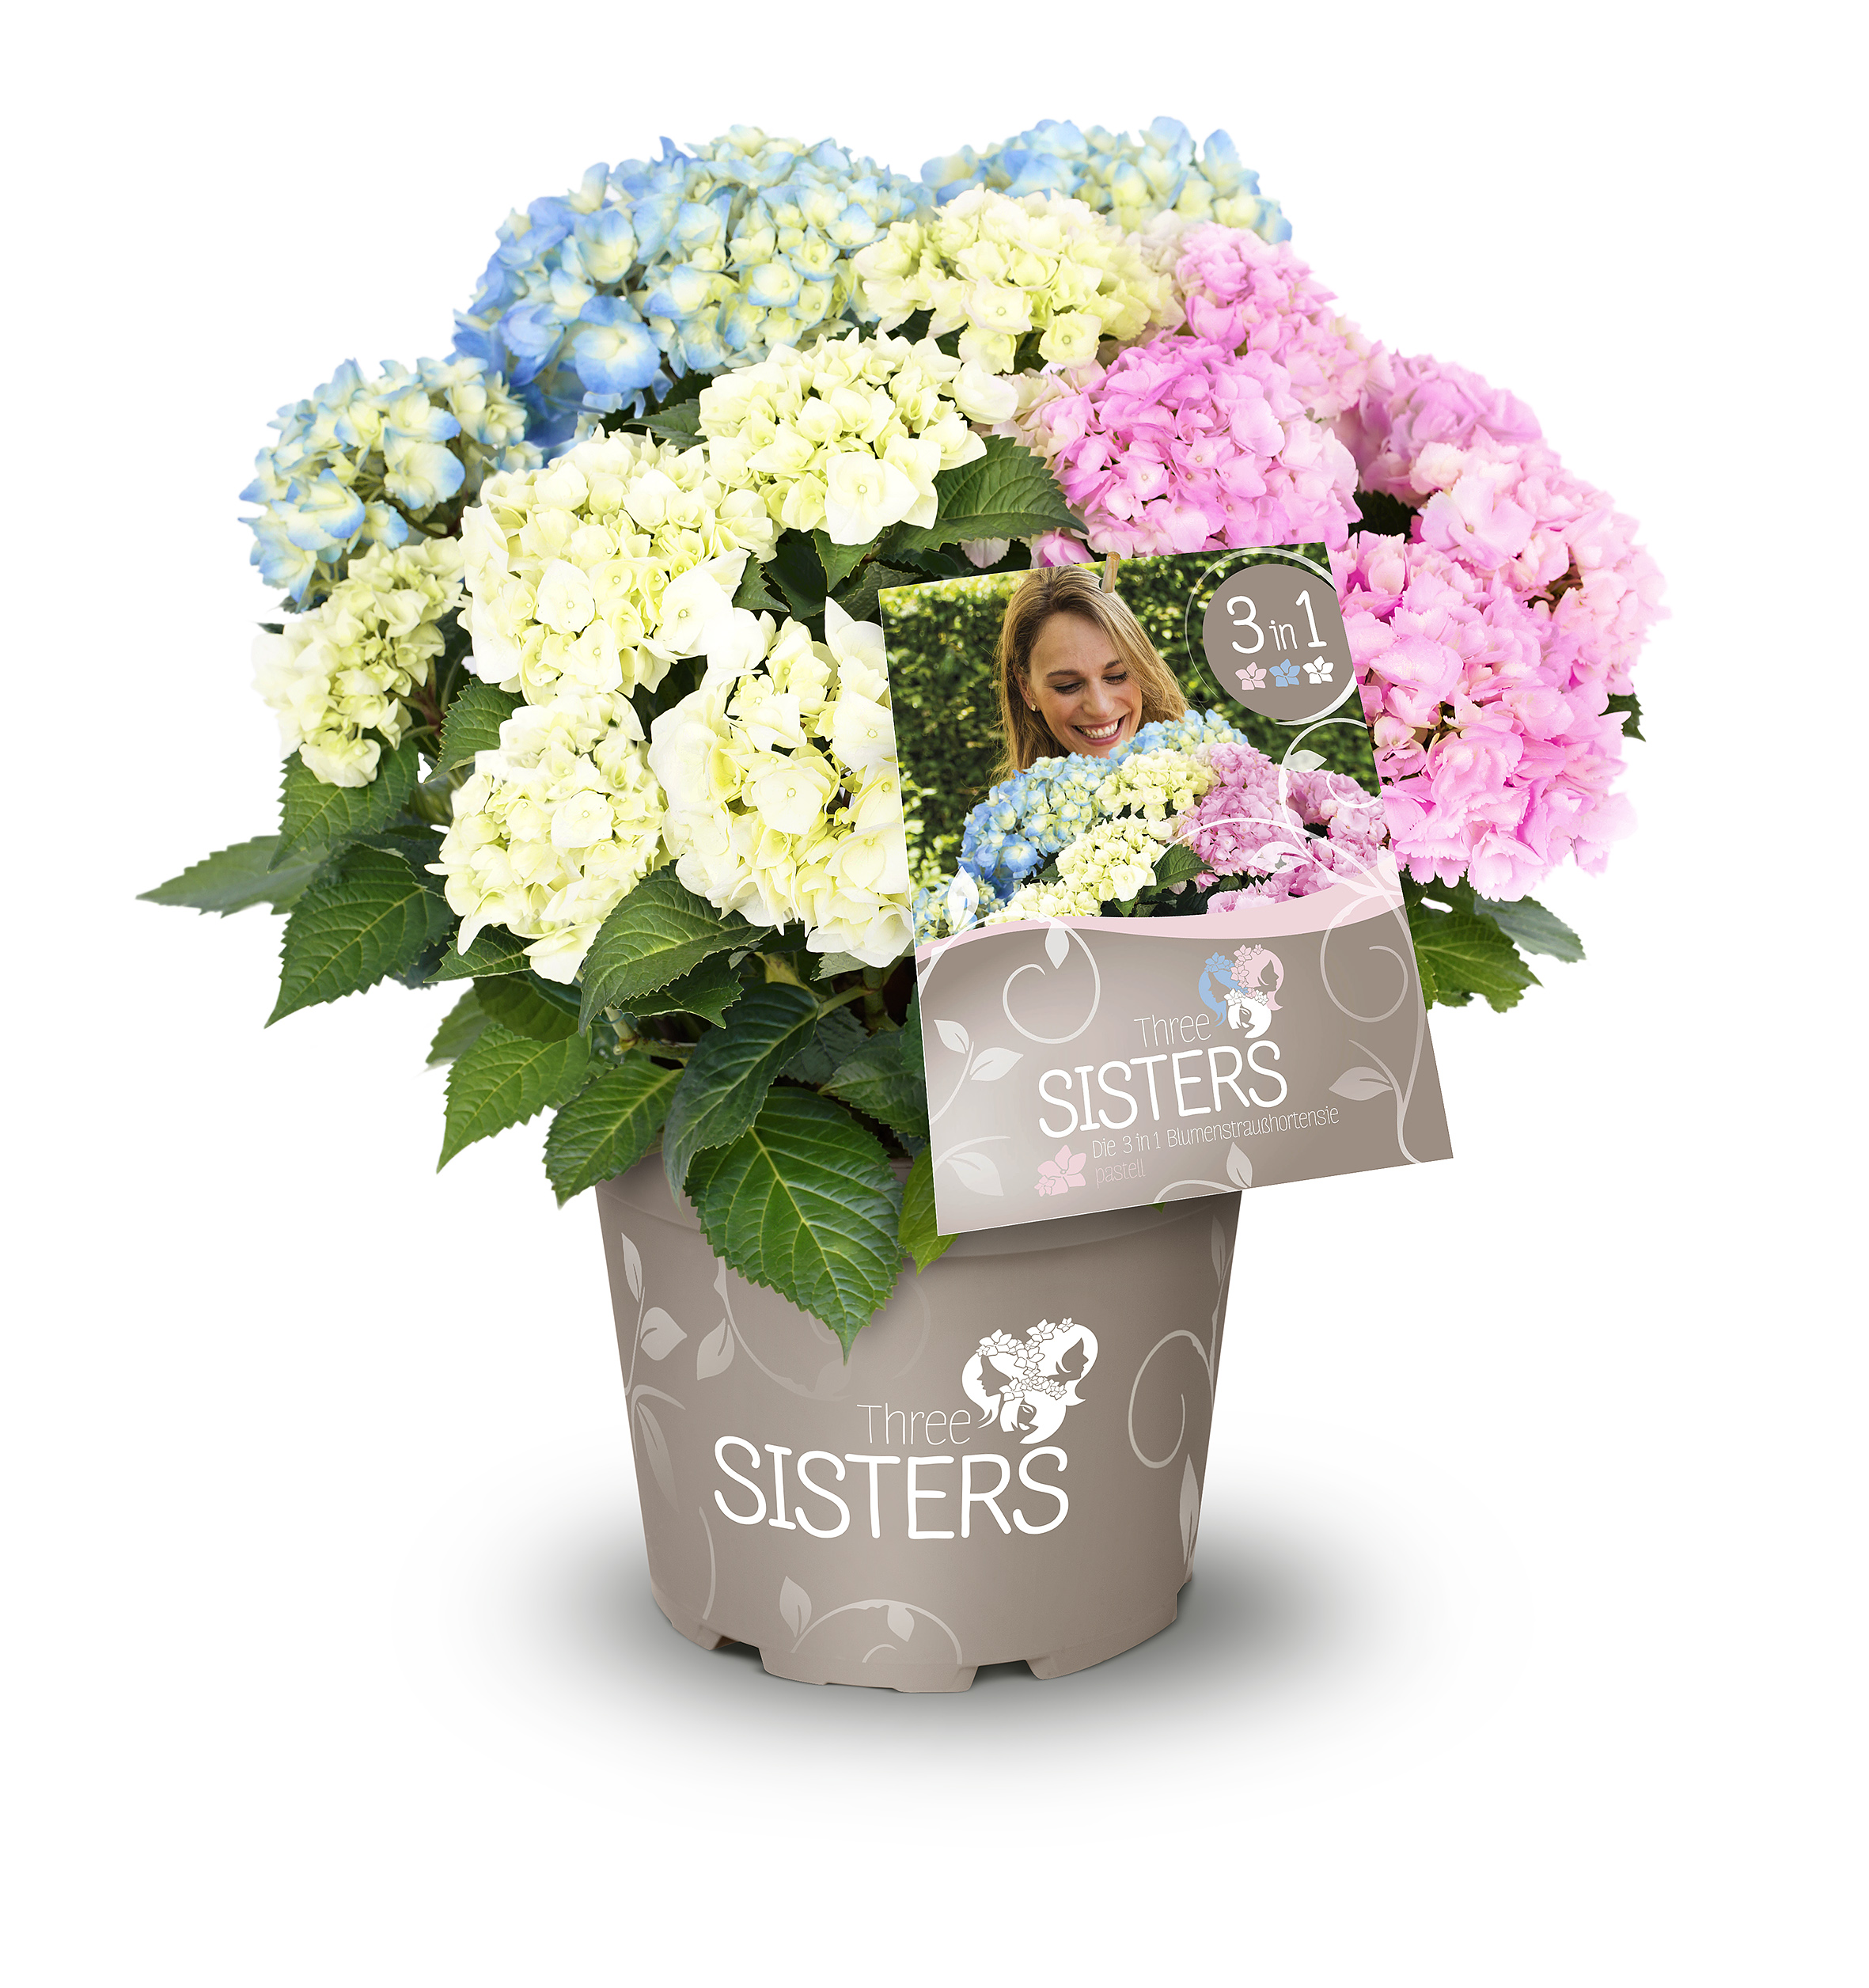 Dreifarbige Bauernhortensie 'Three Sisters'® Pastell